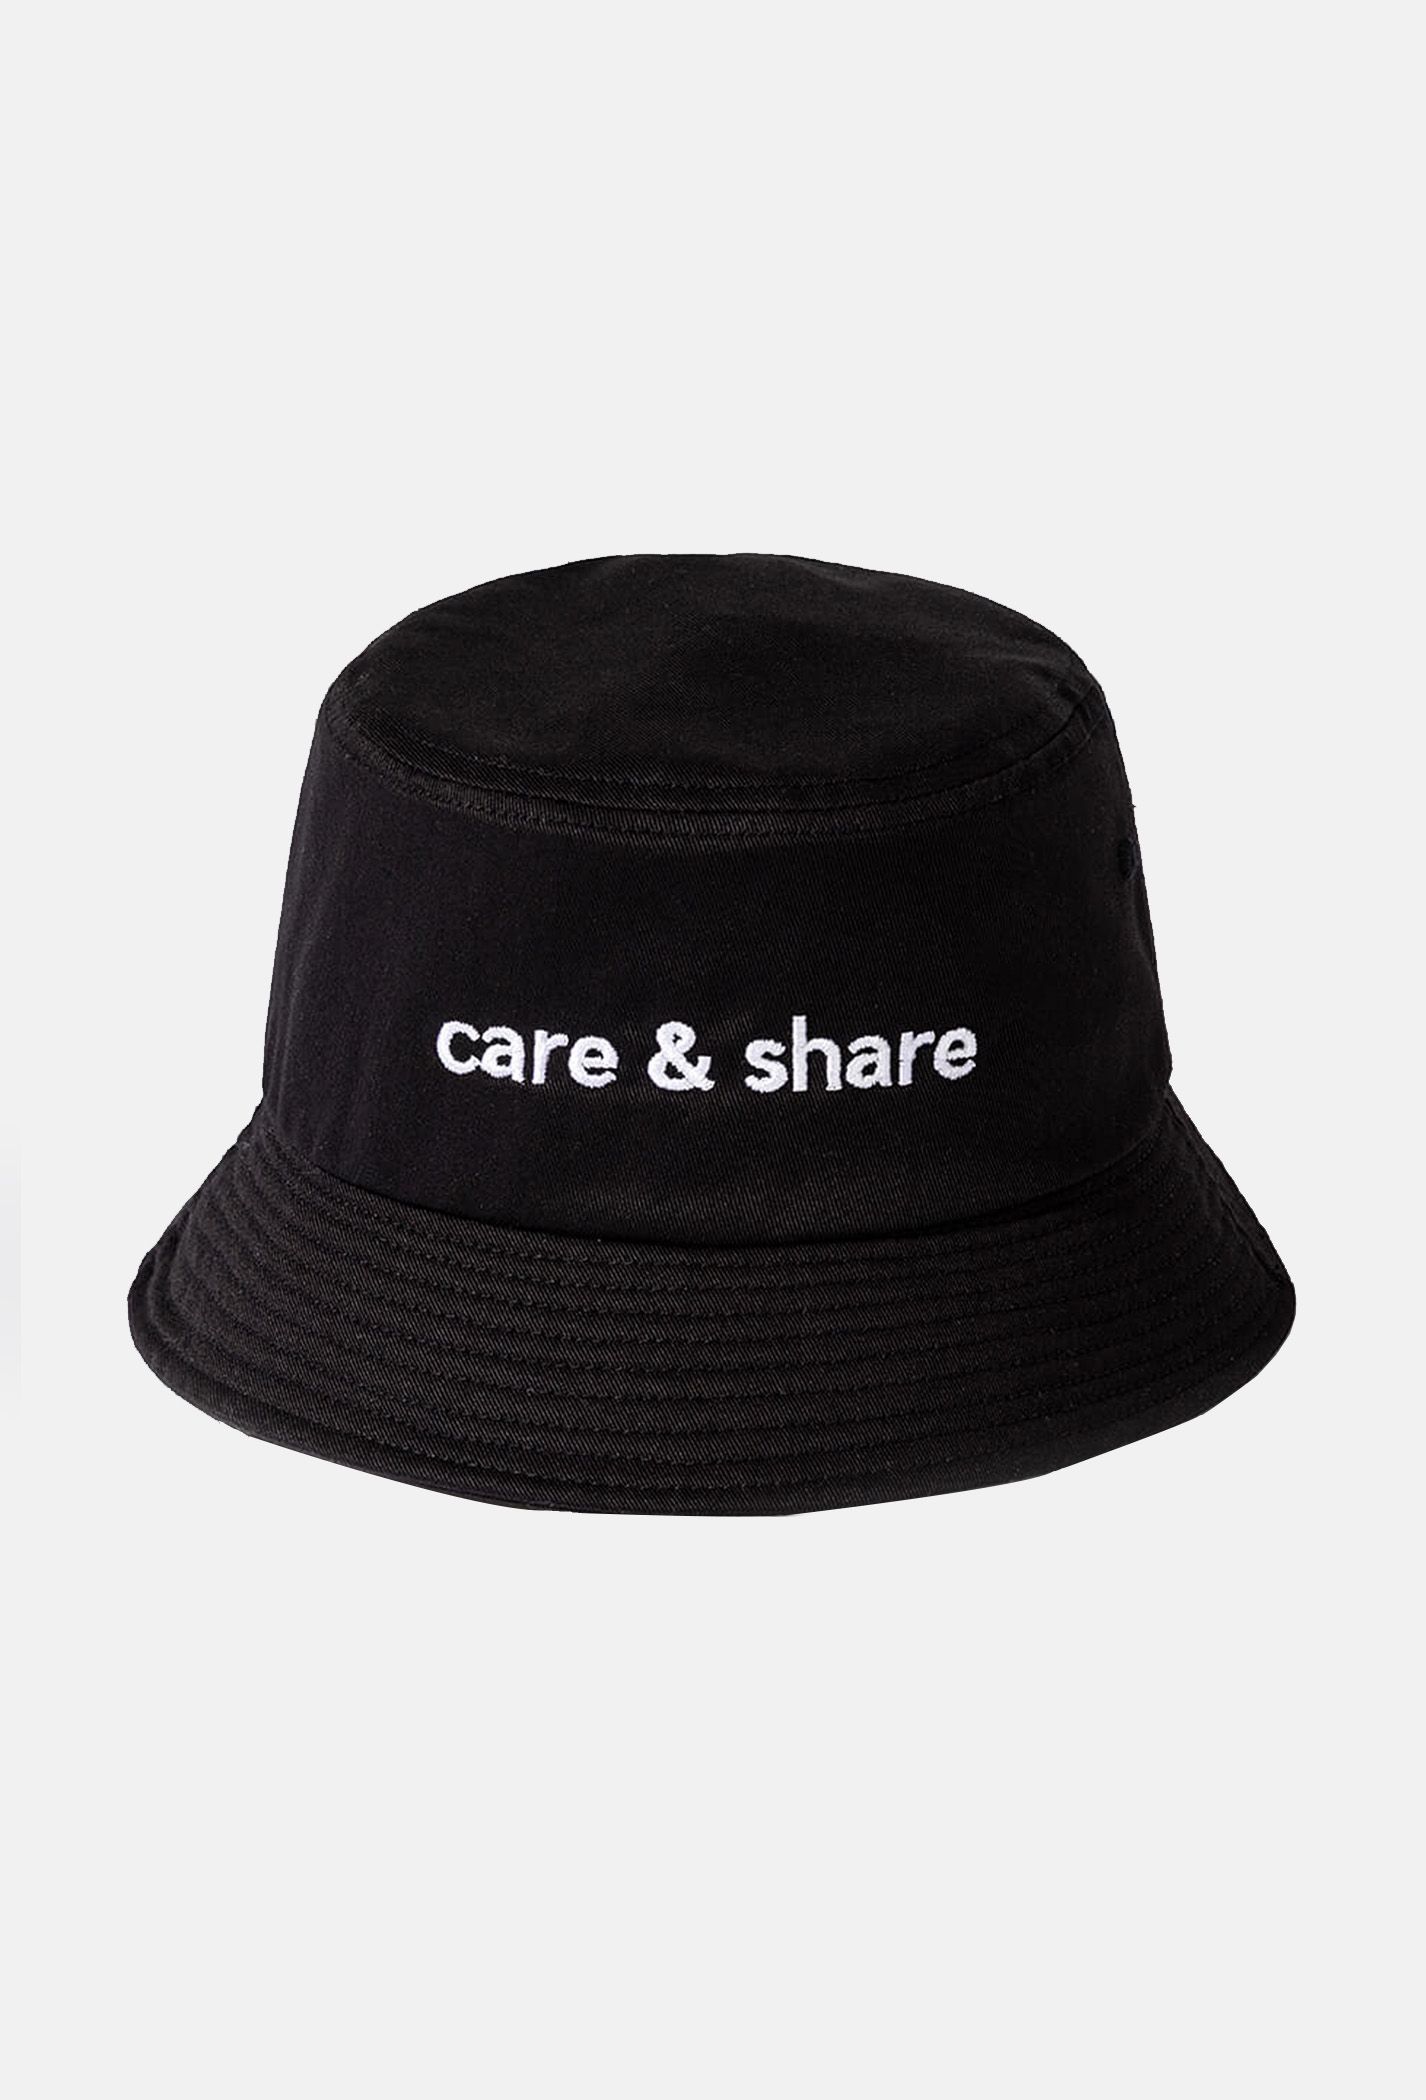 Mũ/Nón Bucket Hat thêu Care & Share Typo Đen